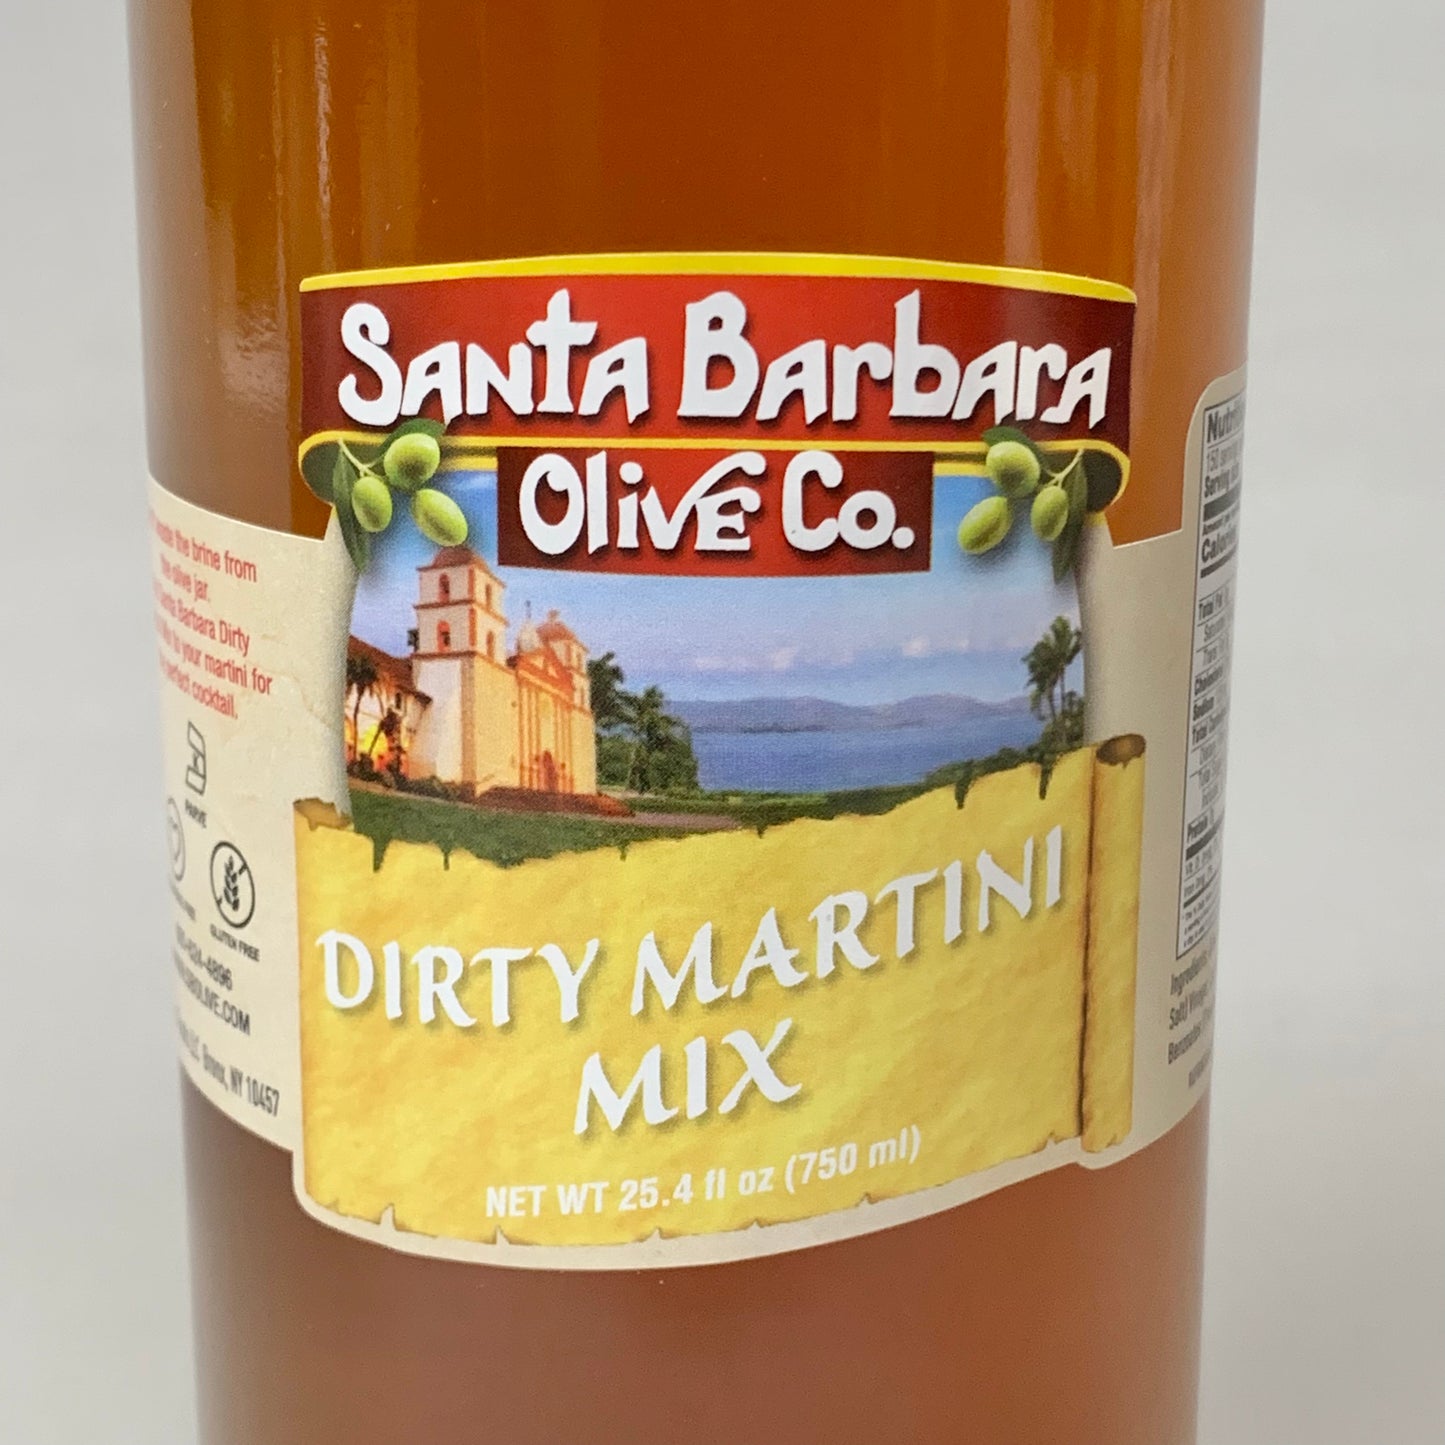 SANTA BARBARA OLIVE CO Dirty Martini Mix 6-Pack 25.4 fl oz BB 03/24 55-200-30 (New)